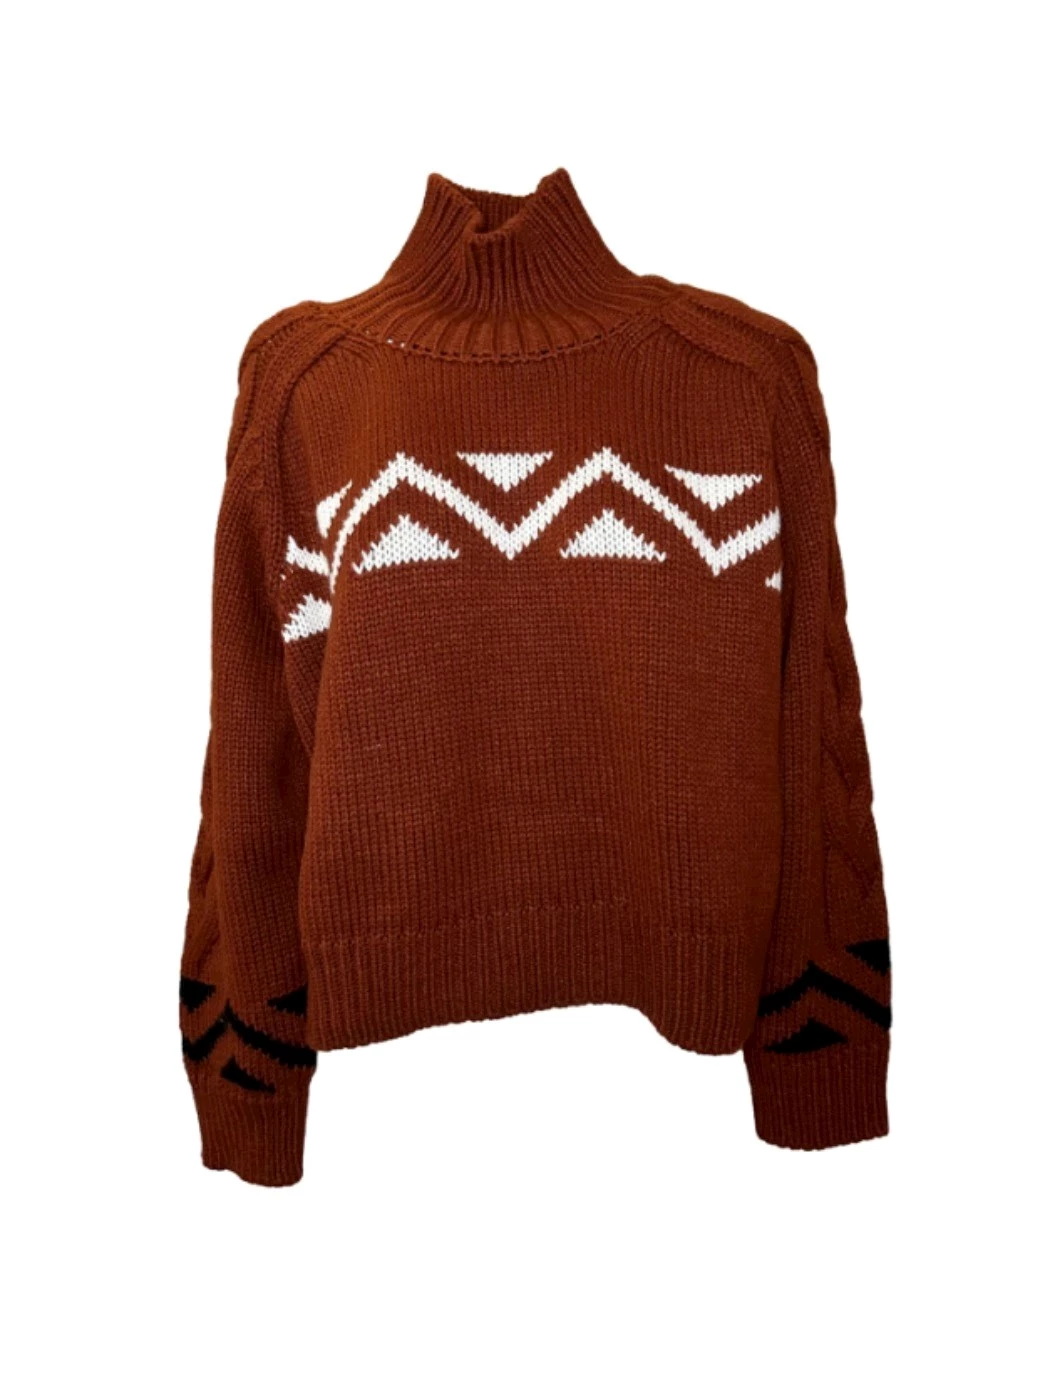 SOLOTRE turtleneck sweater